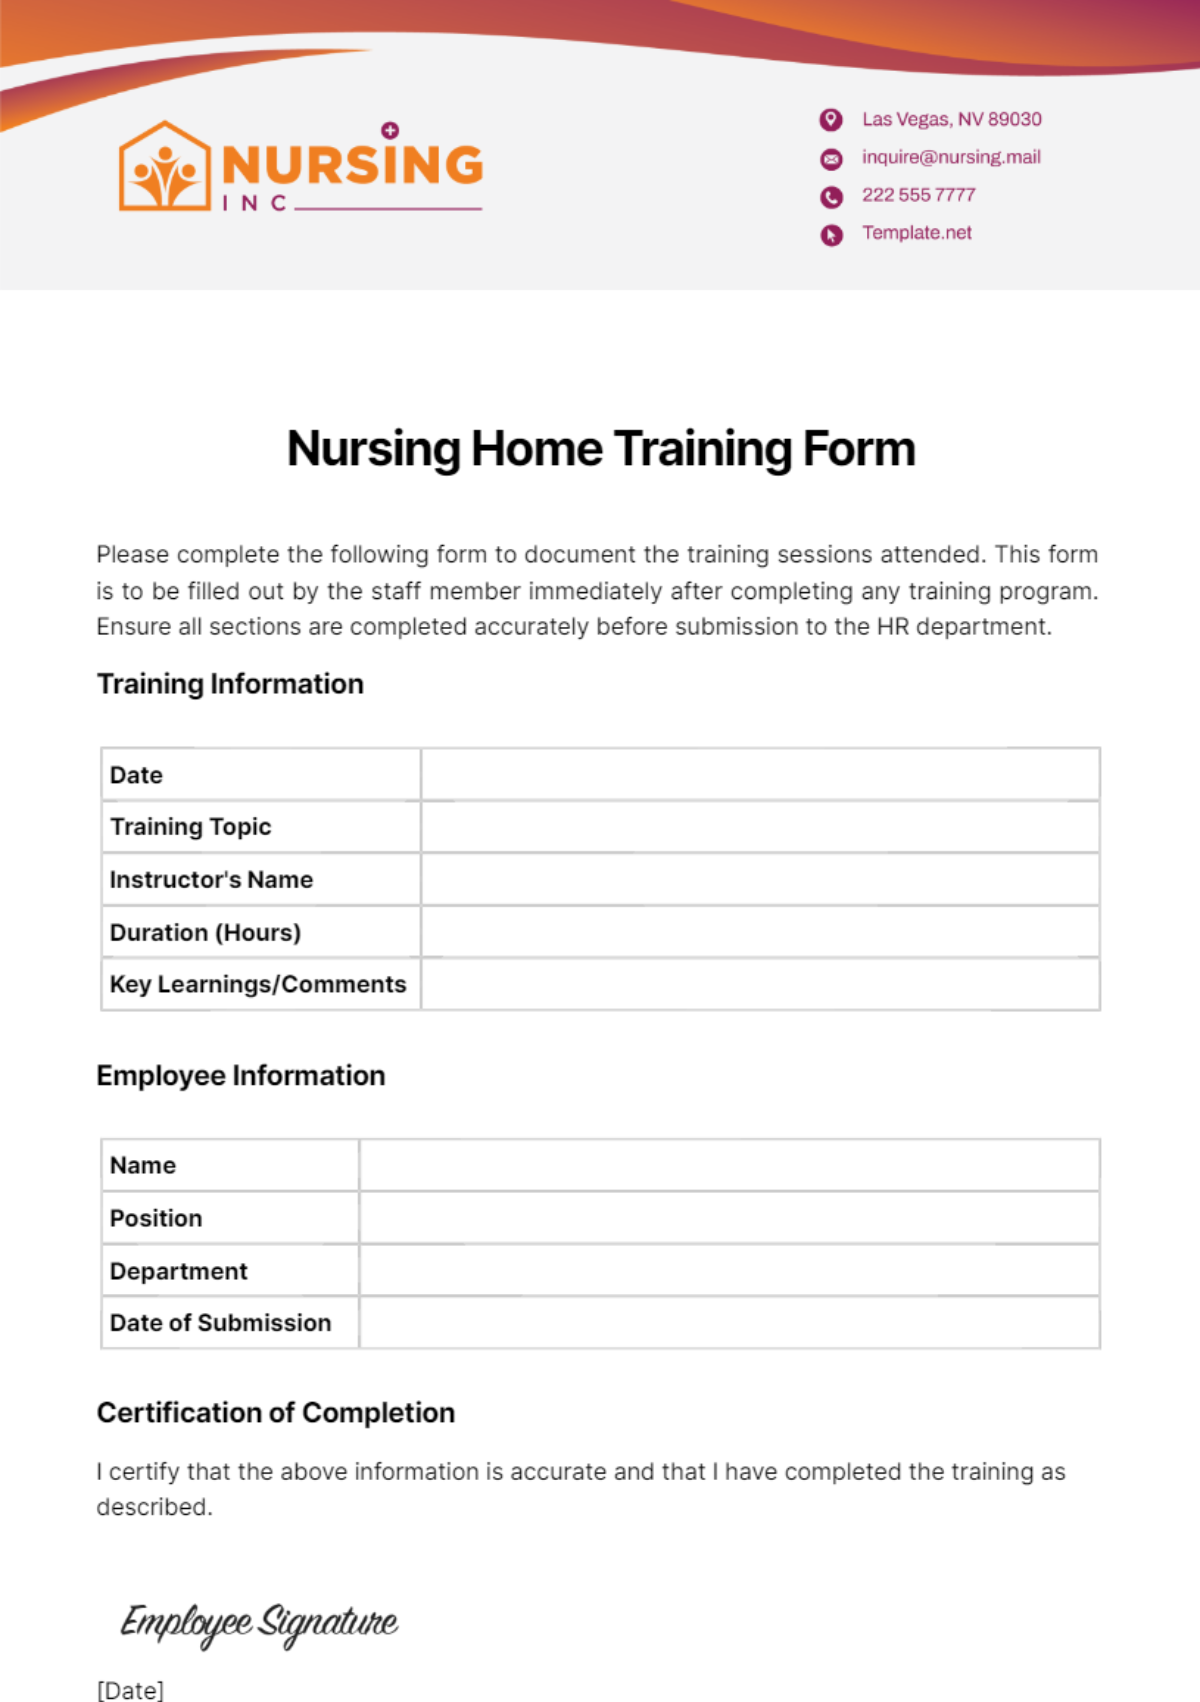 Nursing Home Training Form Template